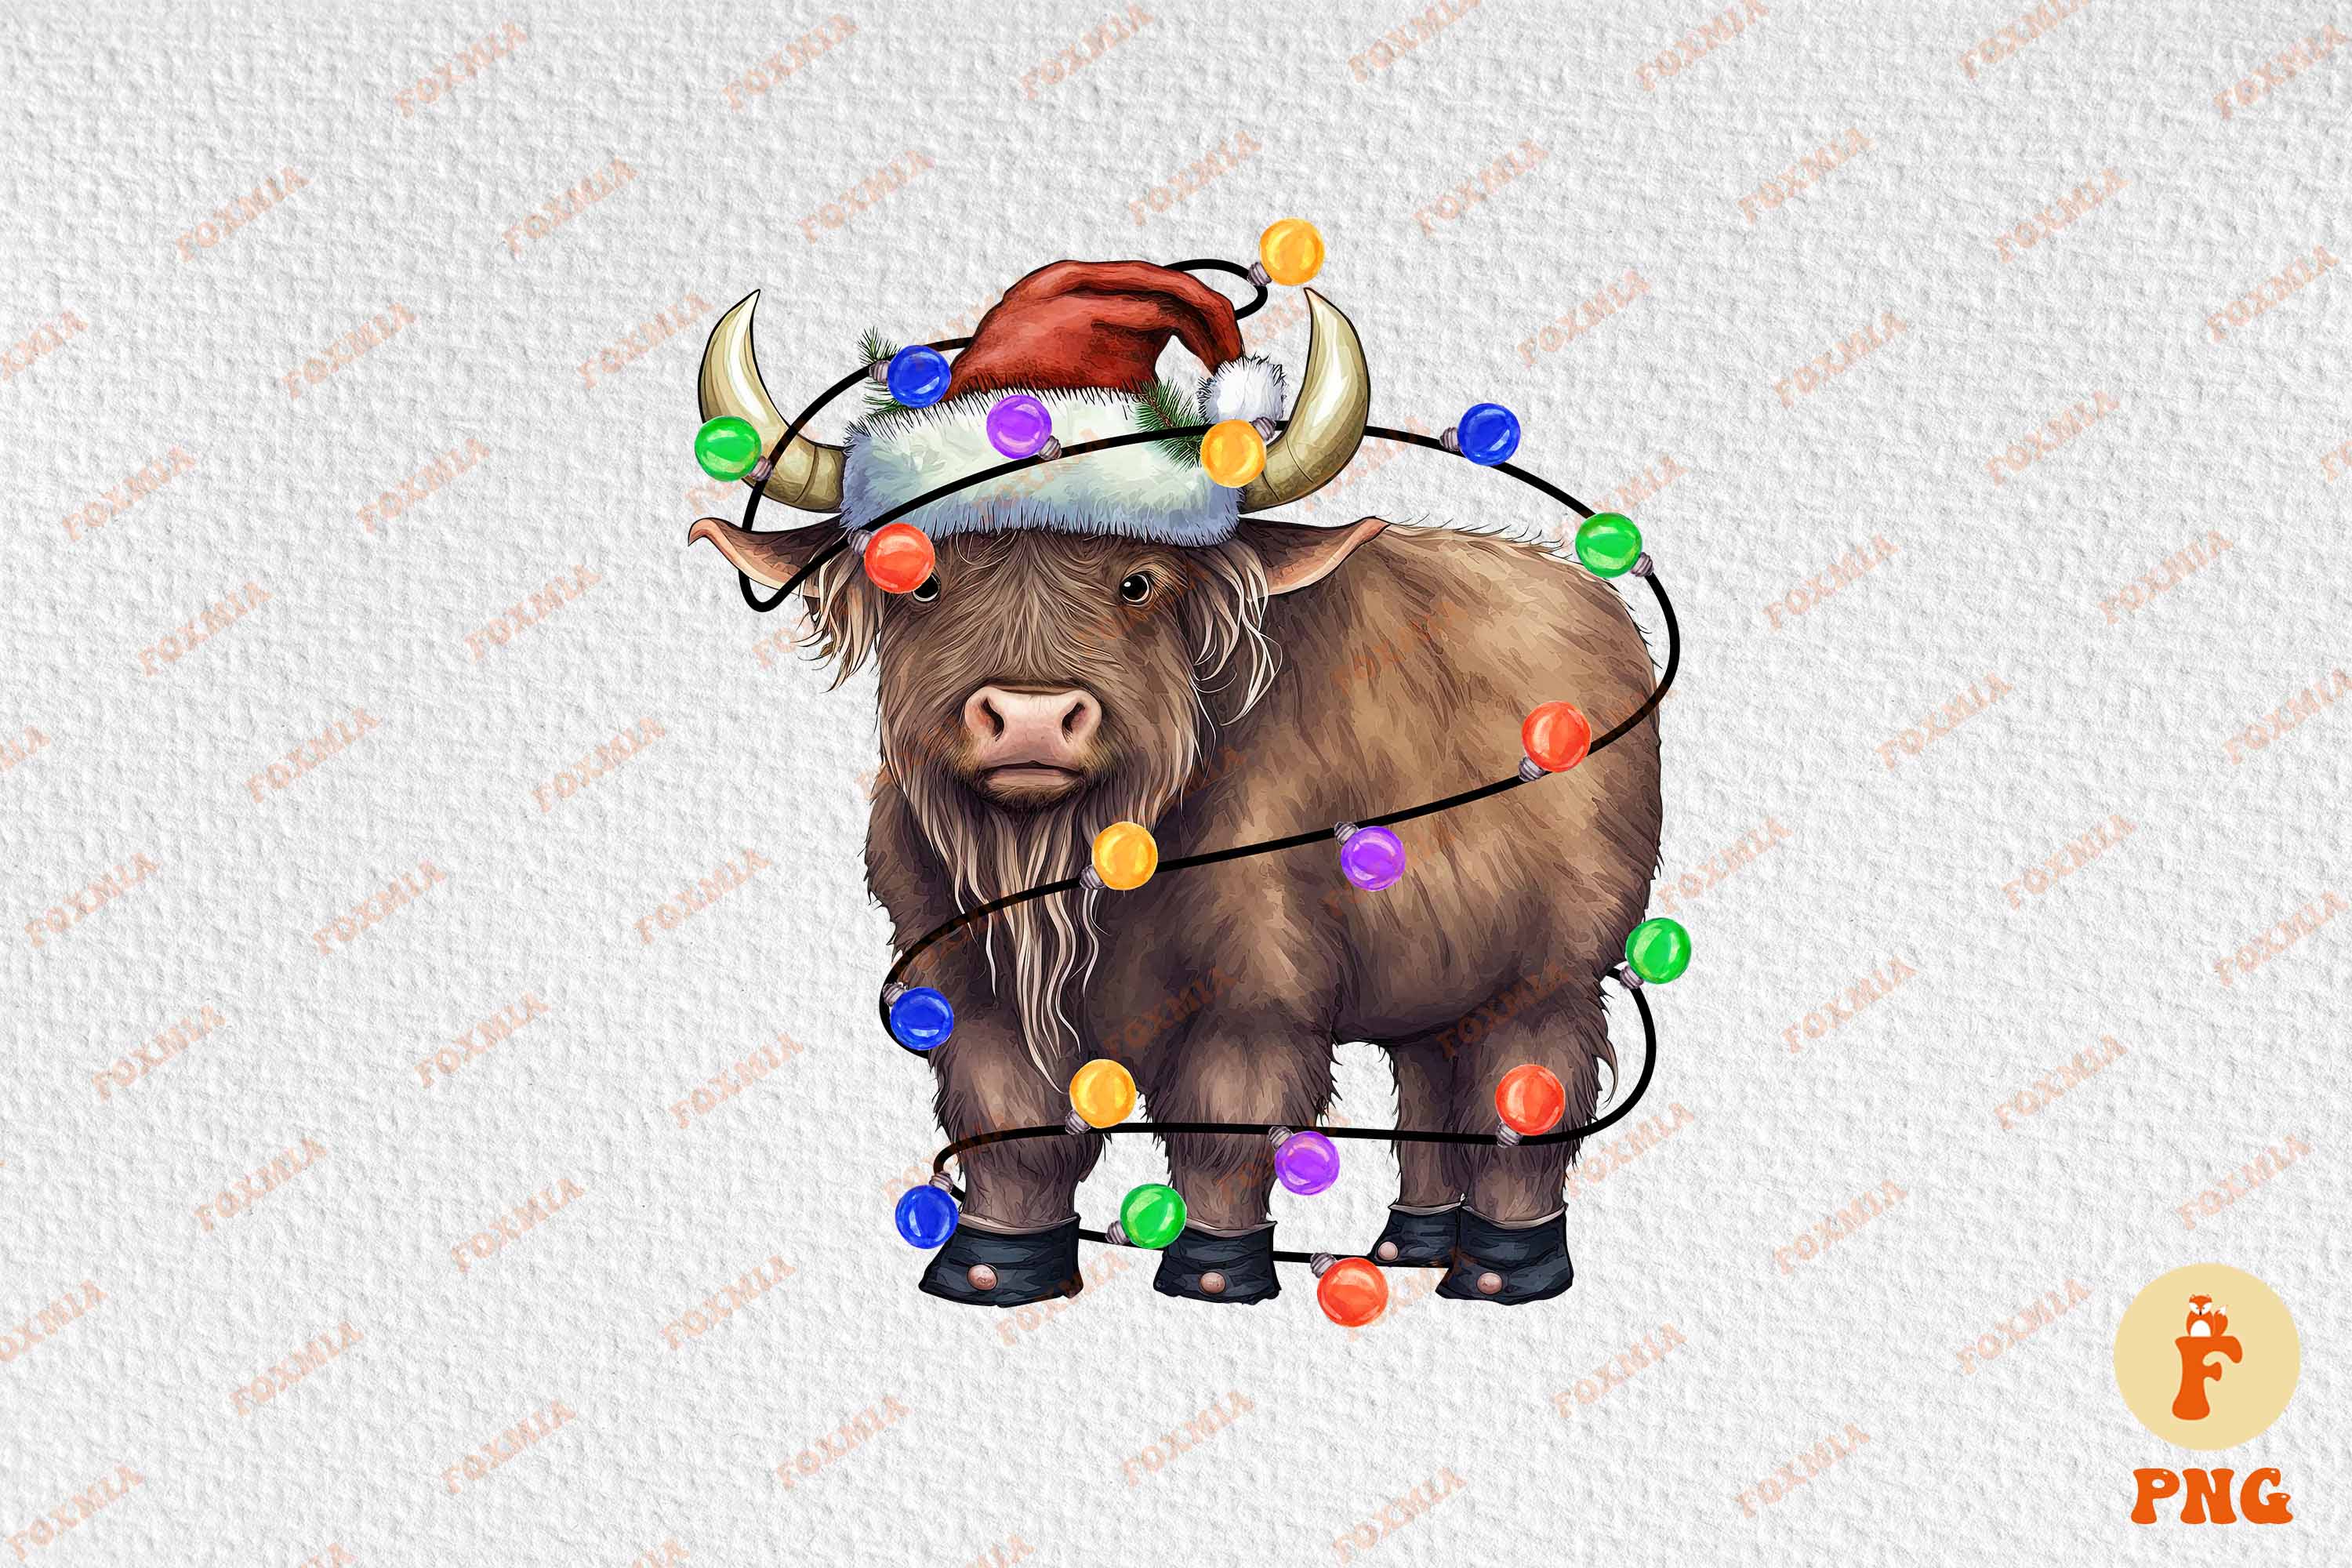 Unique image of a buffalo wearing a santa hat.